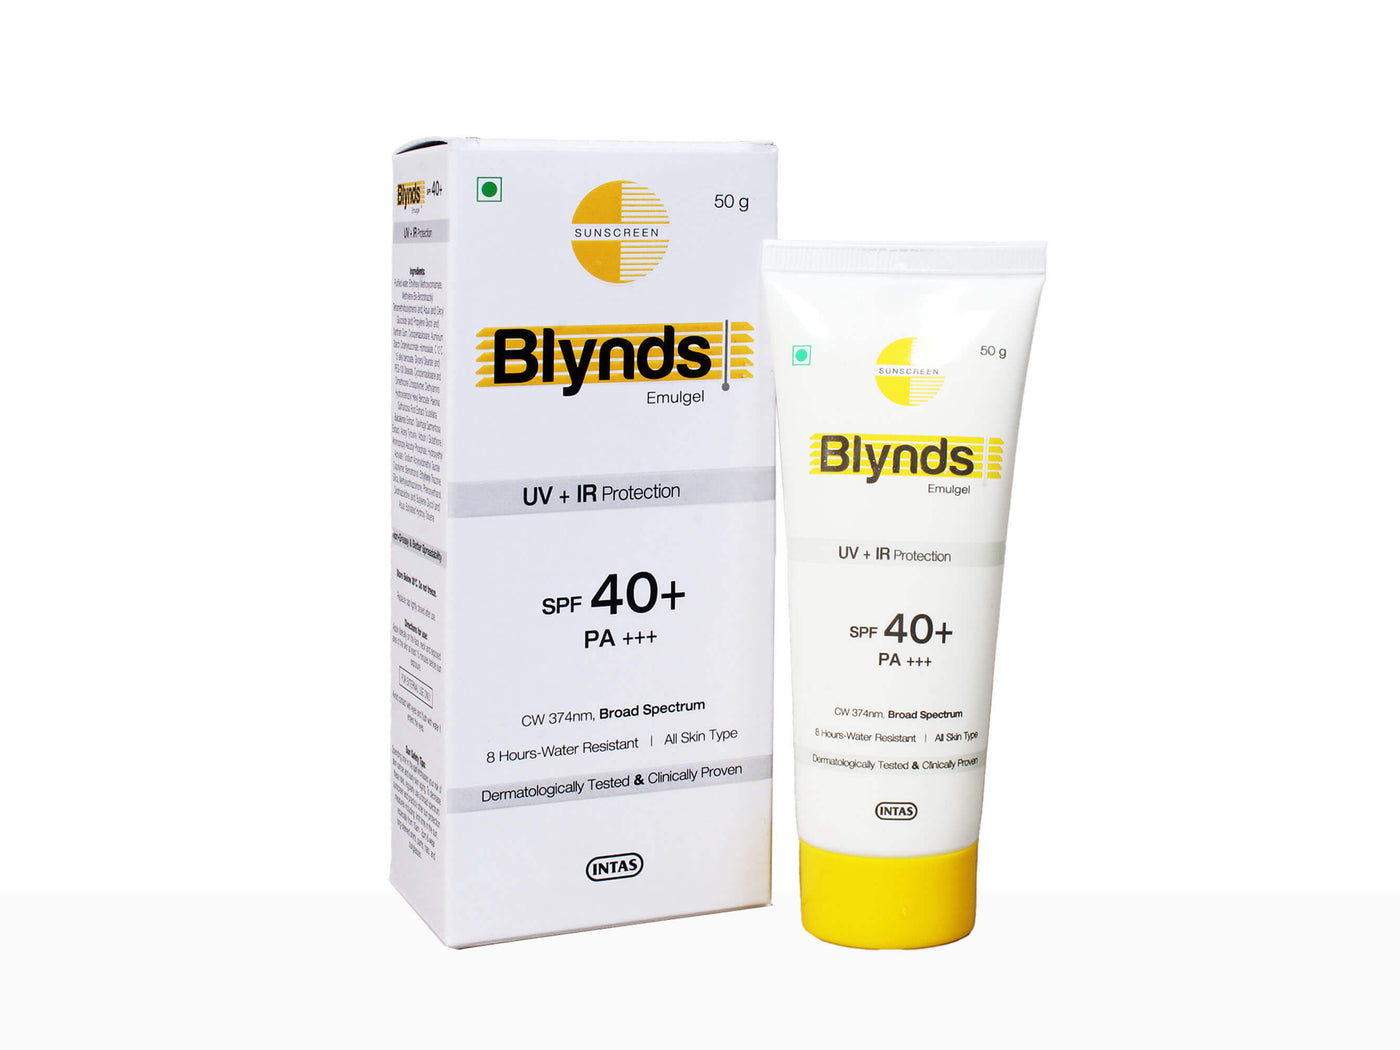 Blynds Emulgel Sunscreen SPF 40+ PA+++ - Clinikally